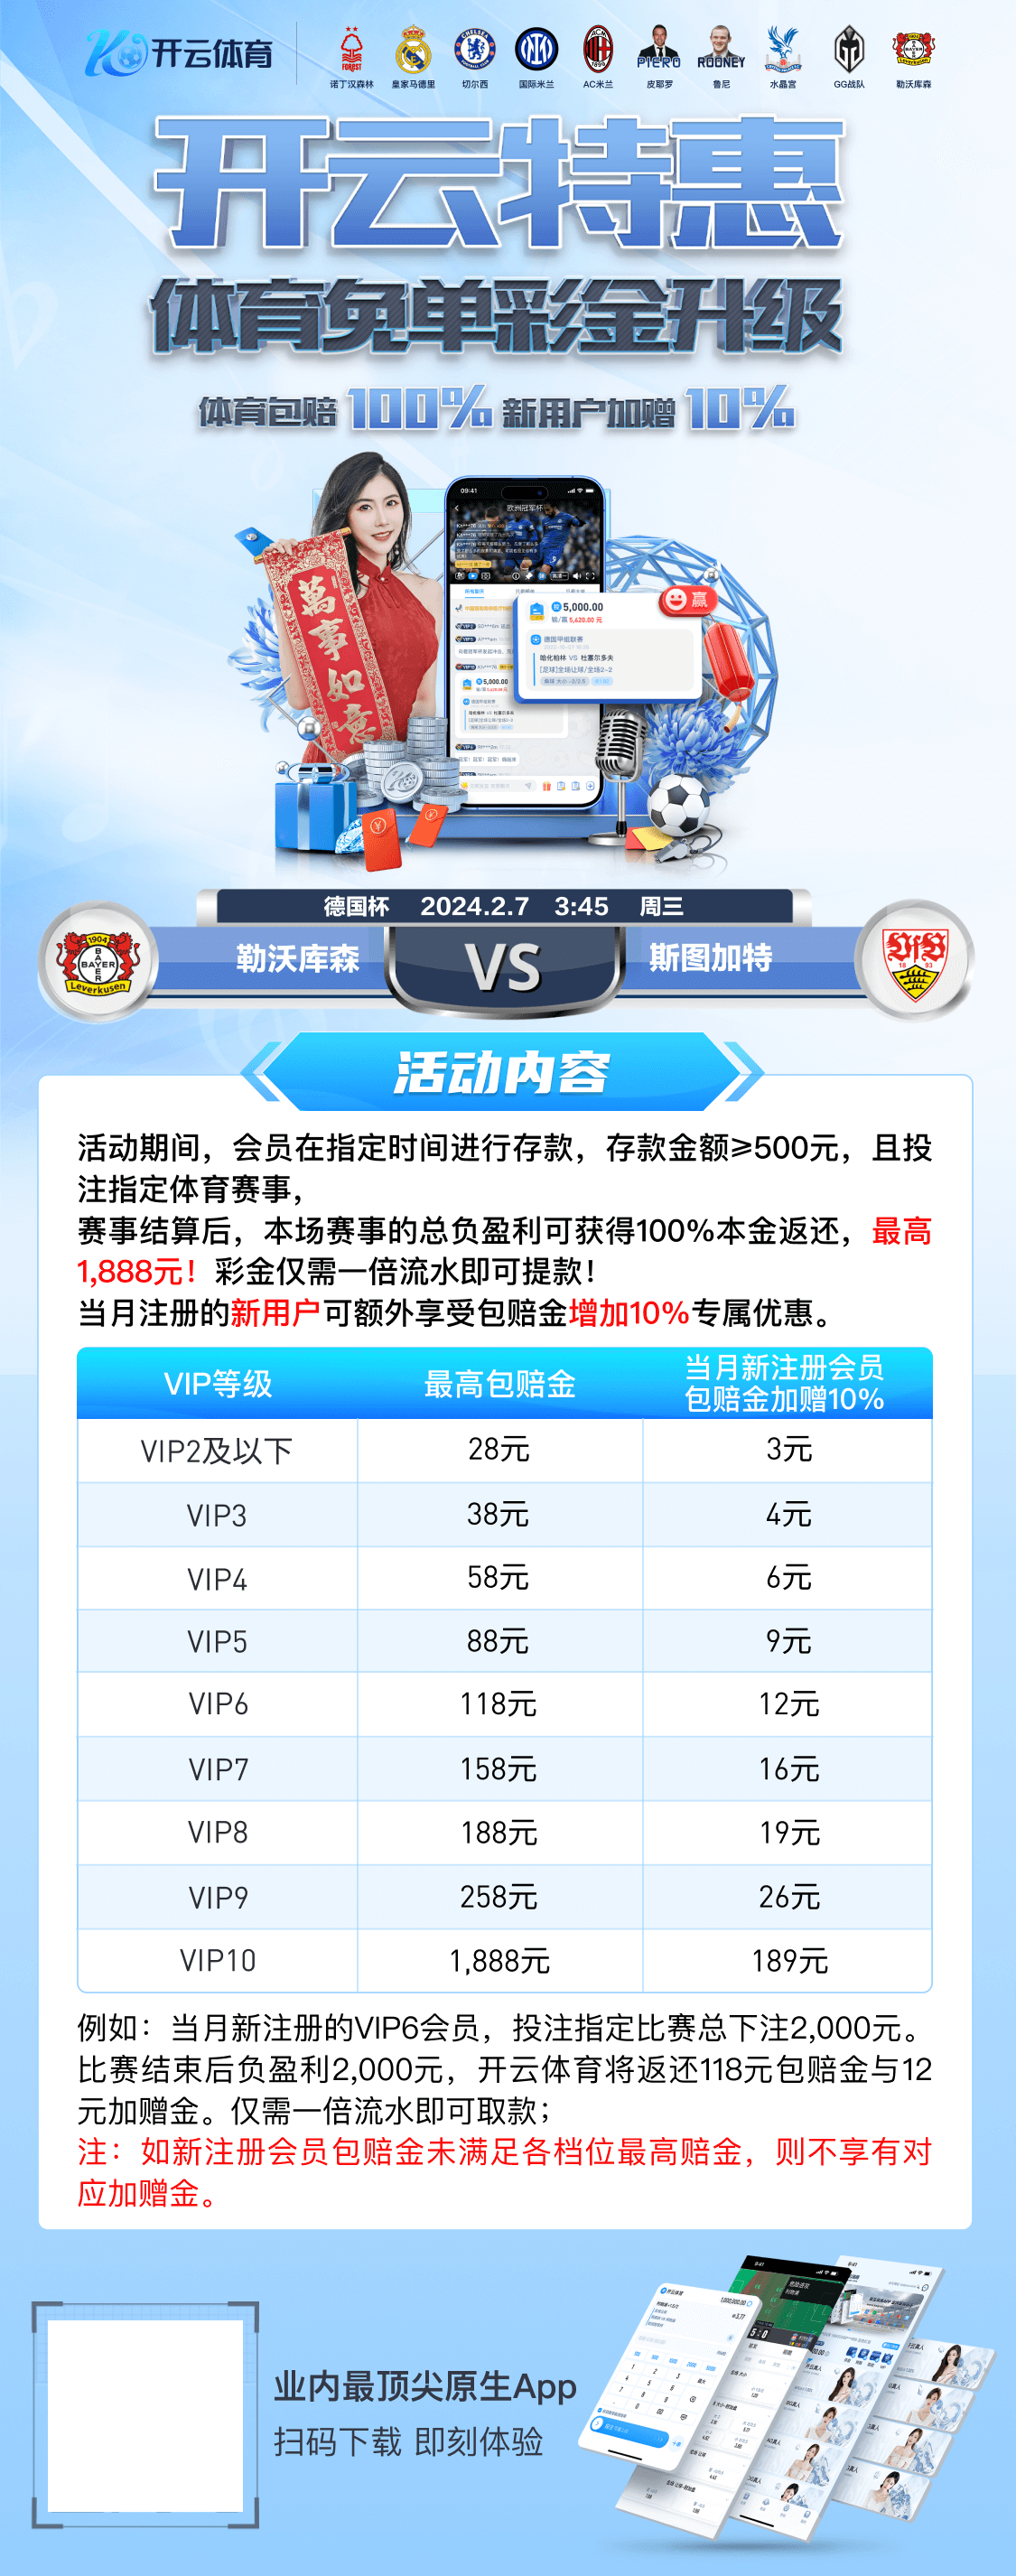 opta足球数据中文版截图